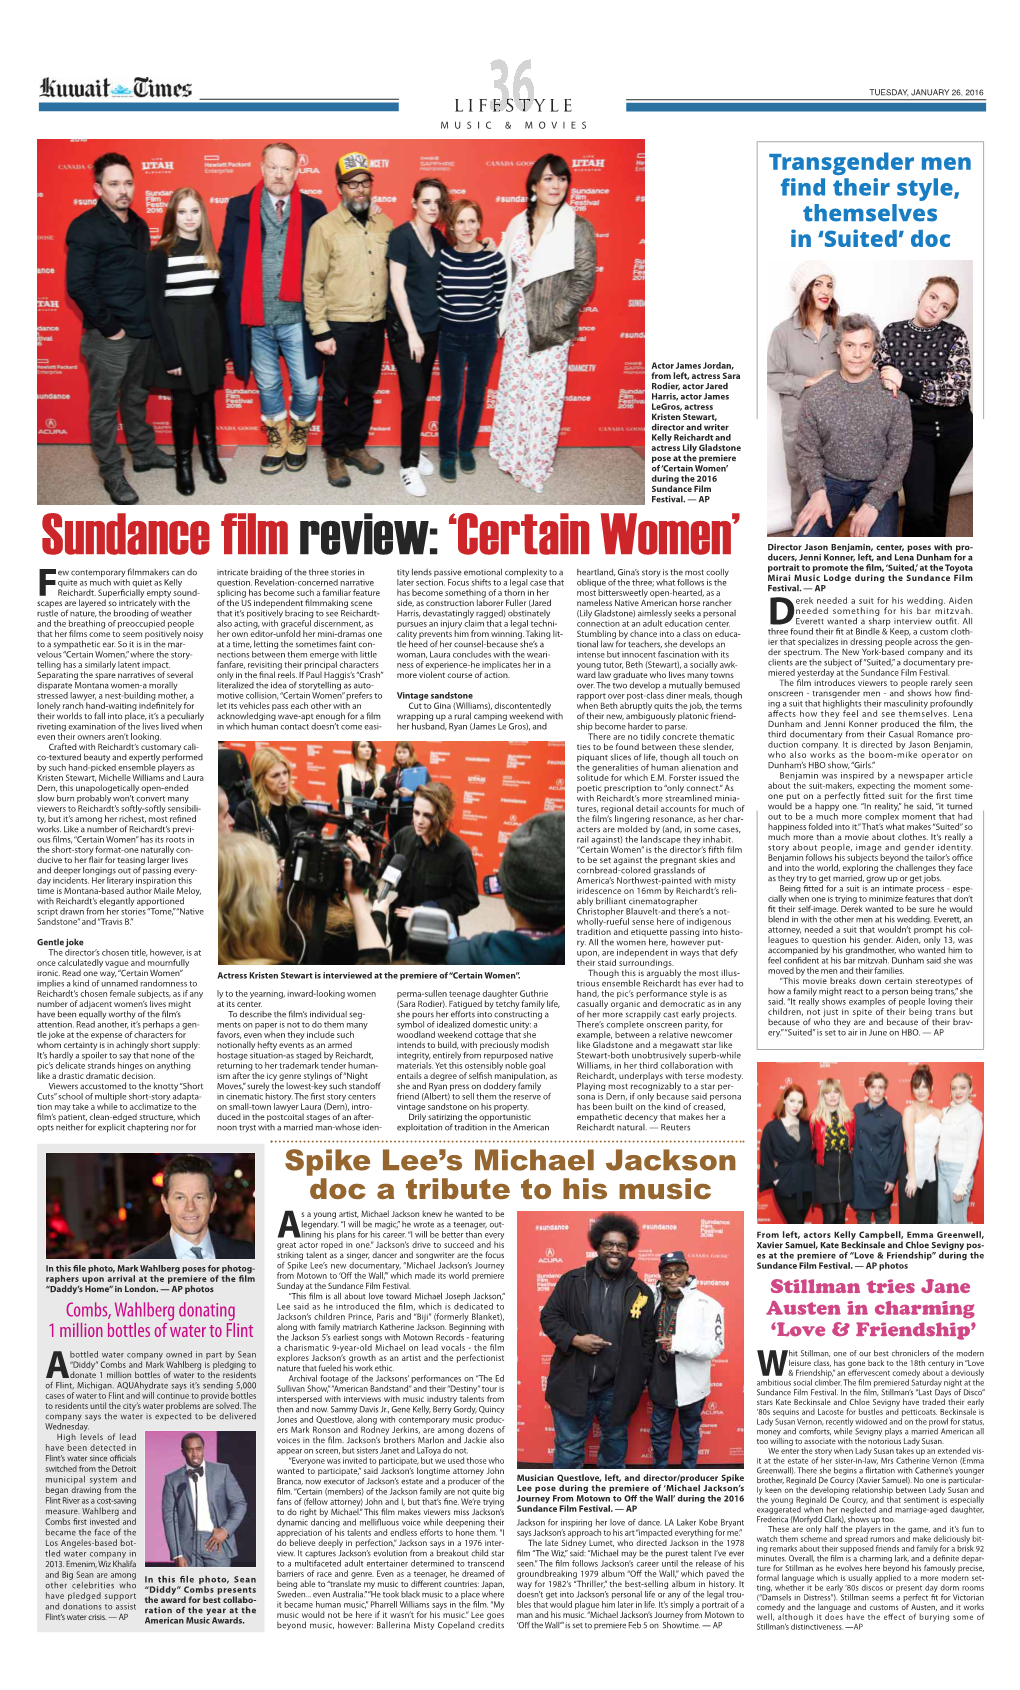 Sundance Film Review: 'Certain Women'